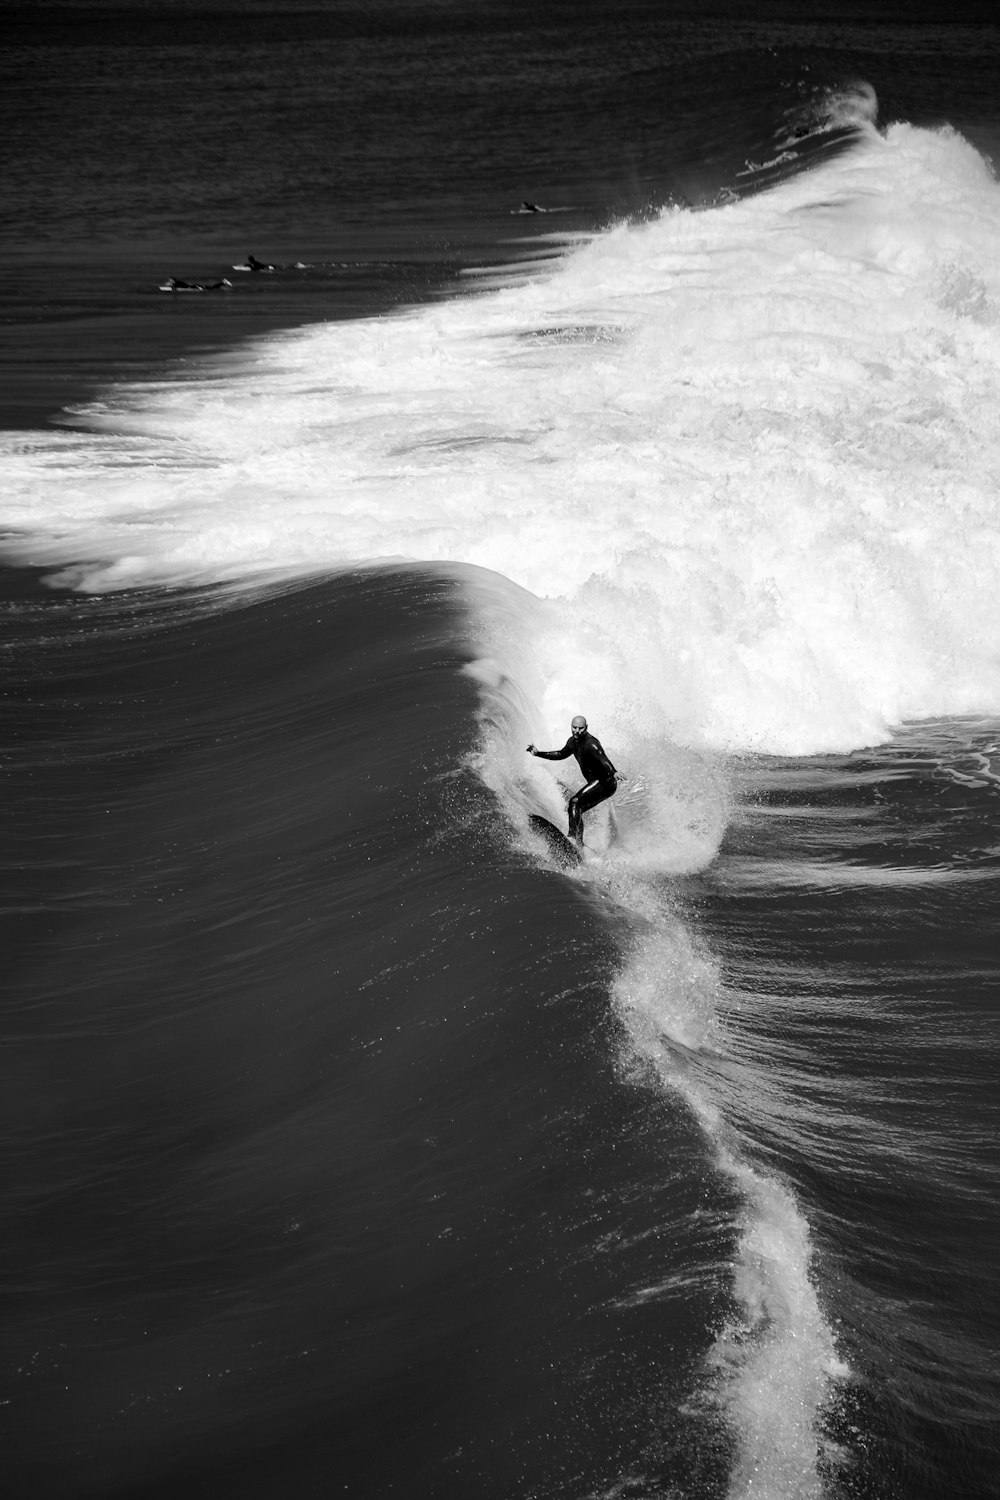 man surfing on big waves